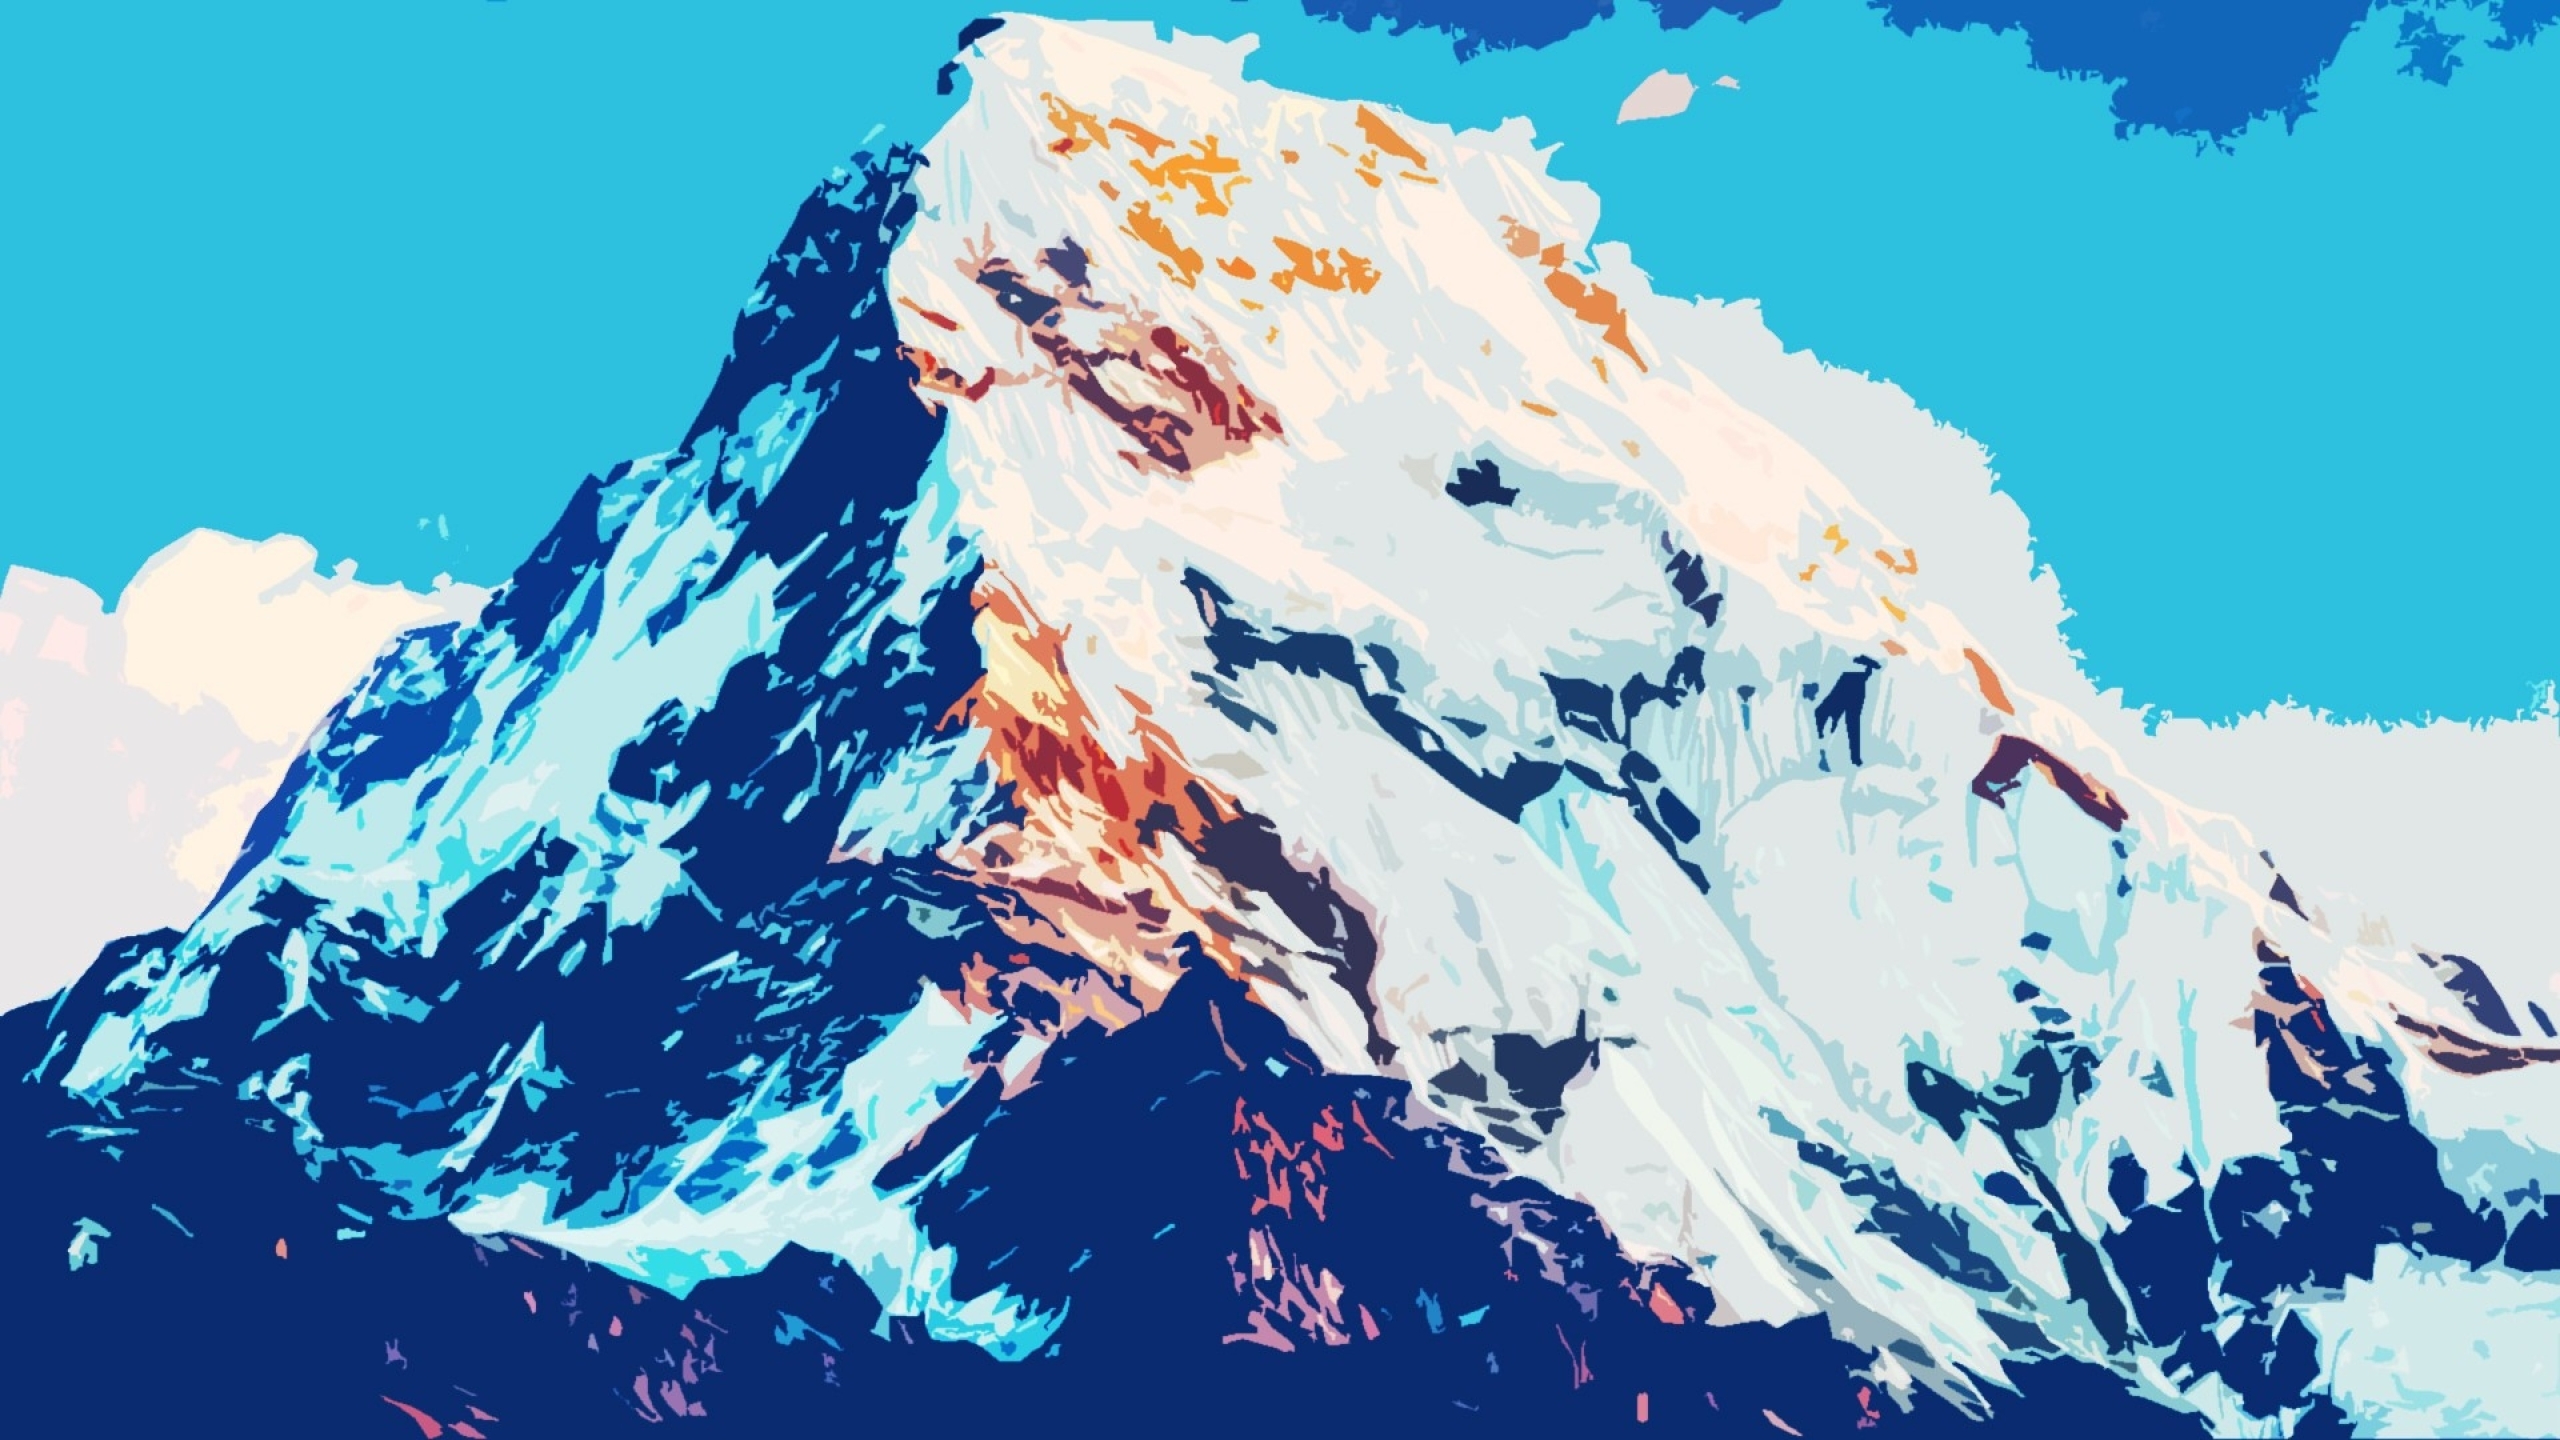 2560x1440 Mountains Sky Pattern 1440p Resolution Wallpaper Hd Vector